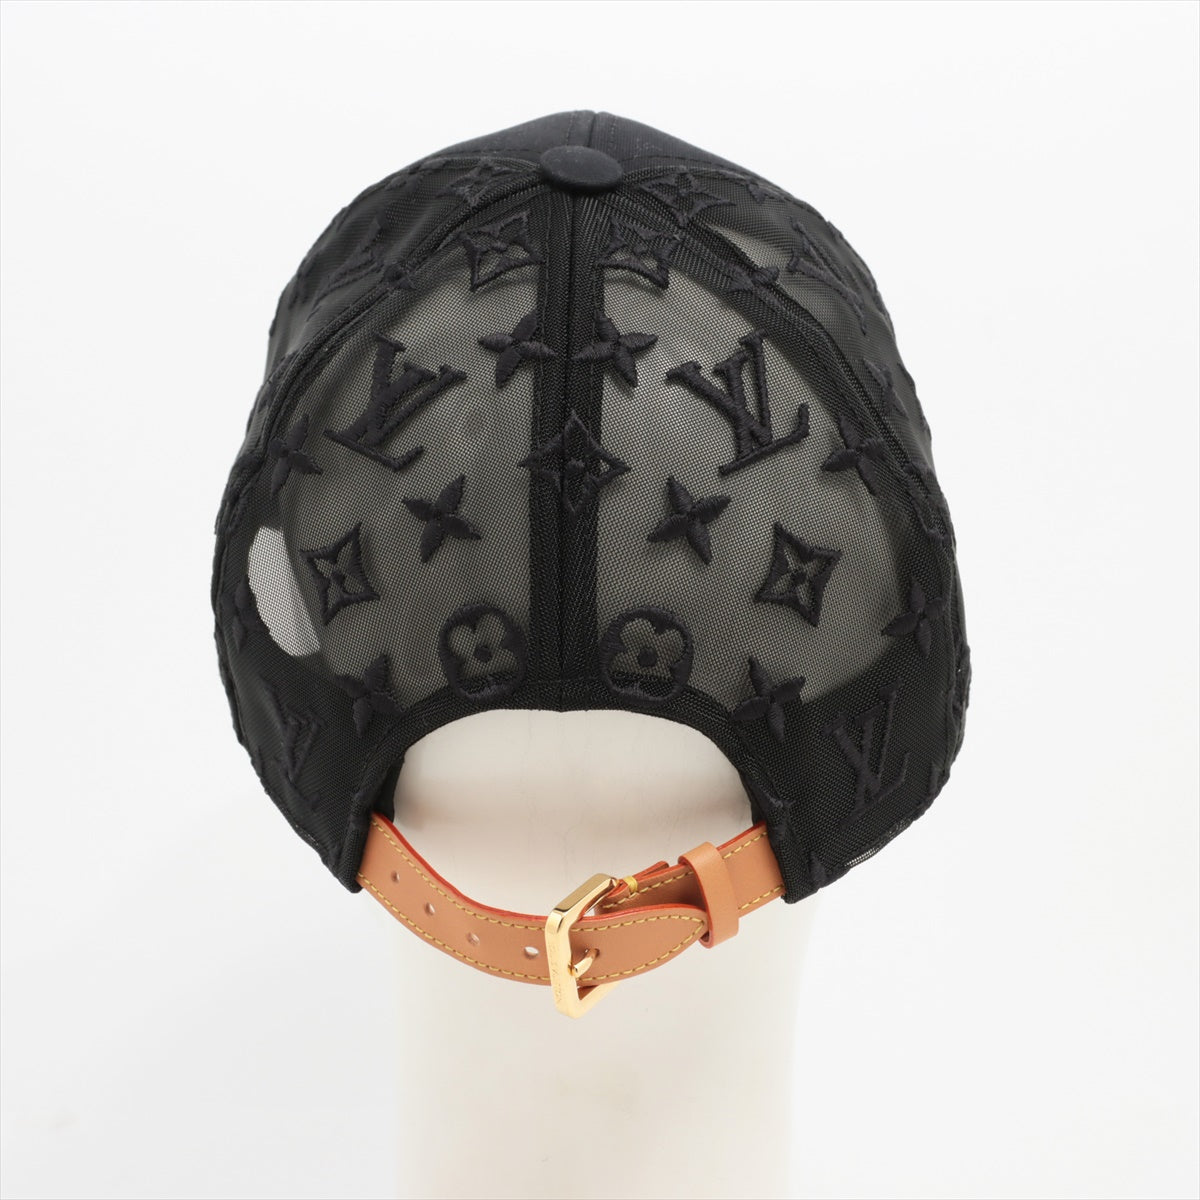 Shop Louis Vuitton Monogram mesh baseball cap (M77115, M77114) by